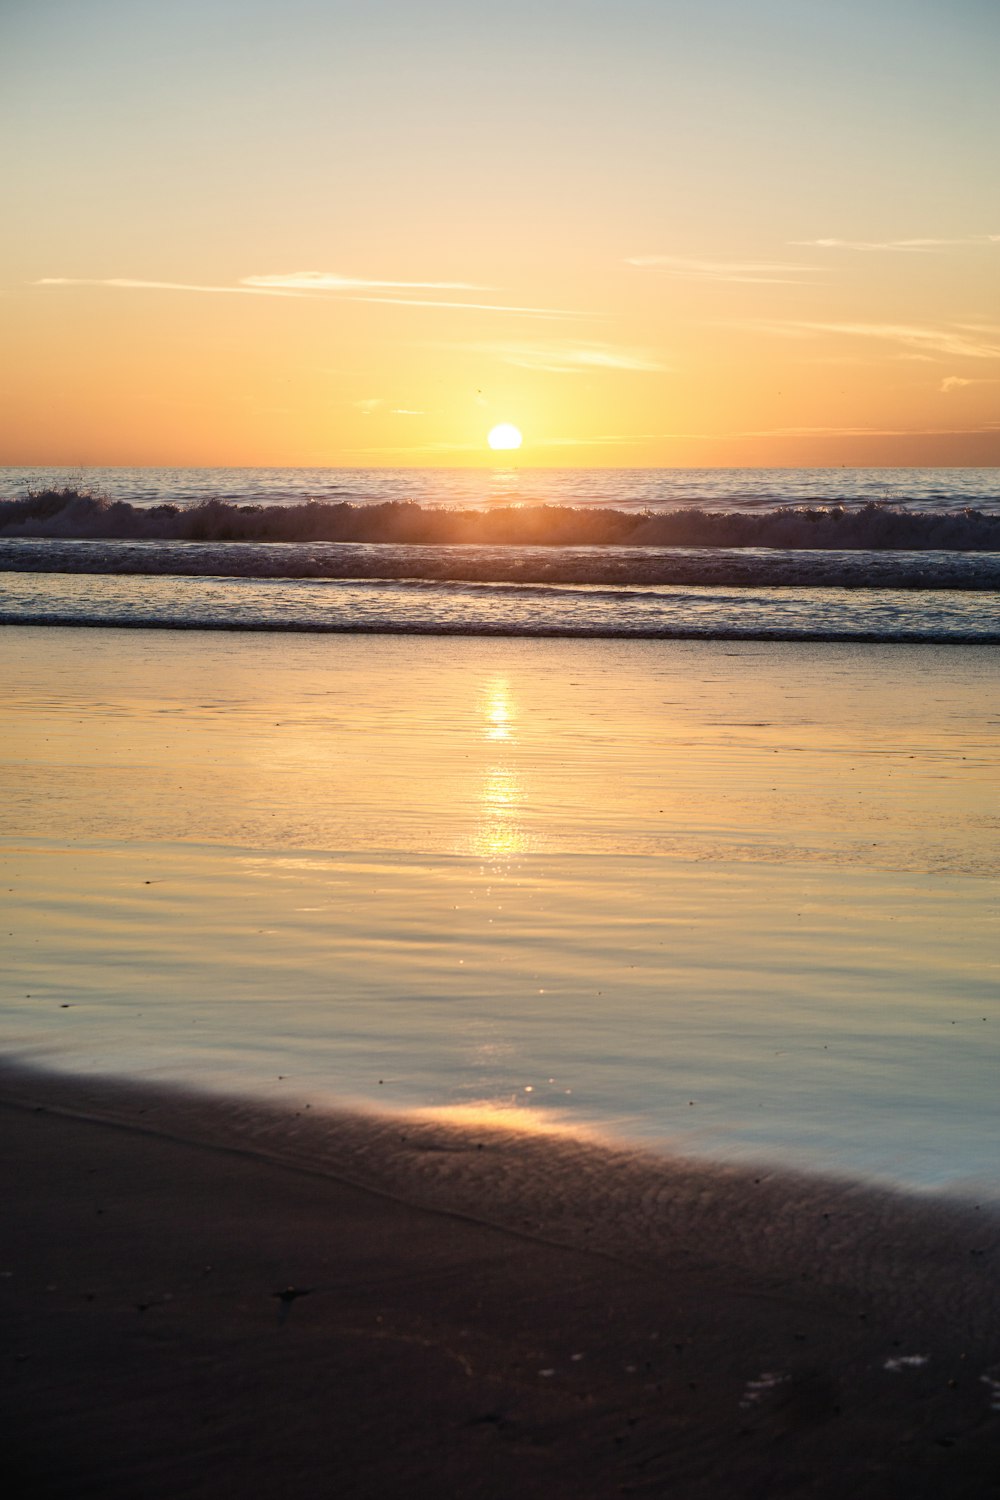 ondas do mar batendo na costa durante o pôr do sol